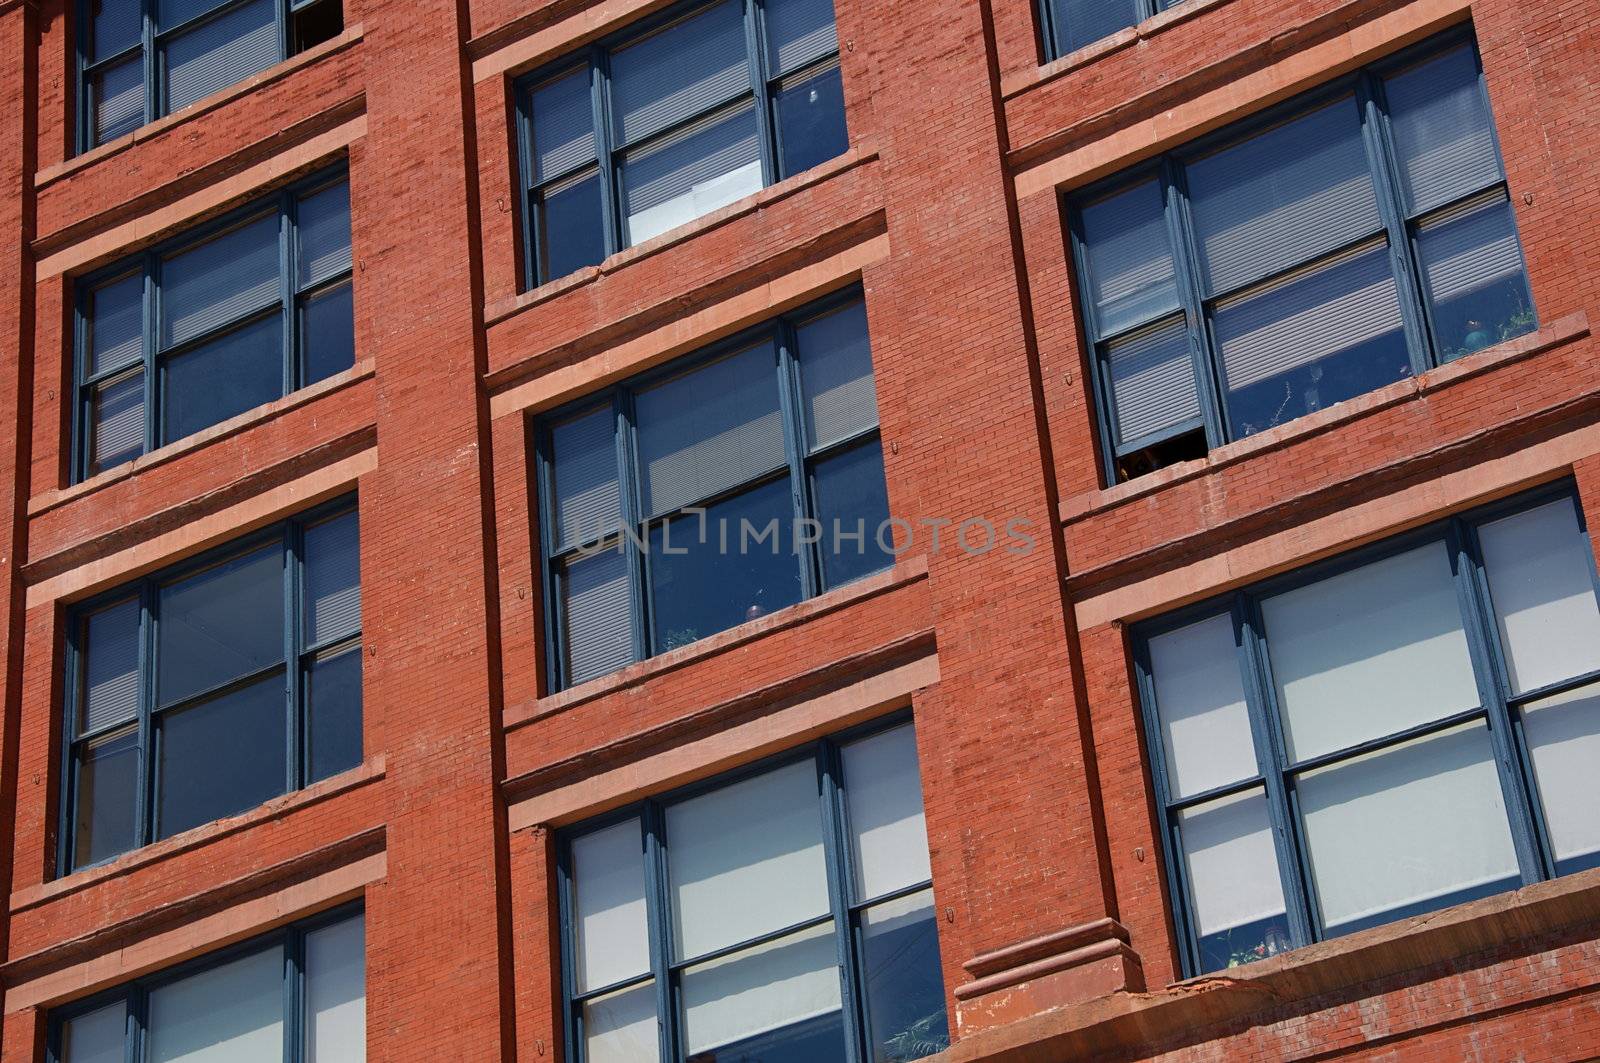 Red Brick Building Exterior by gilmourbto2001